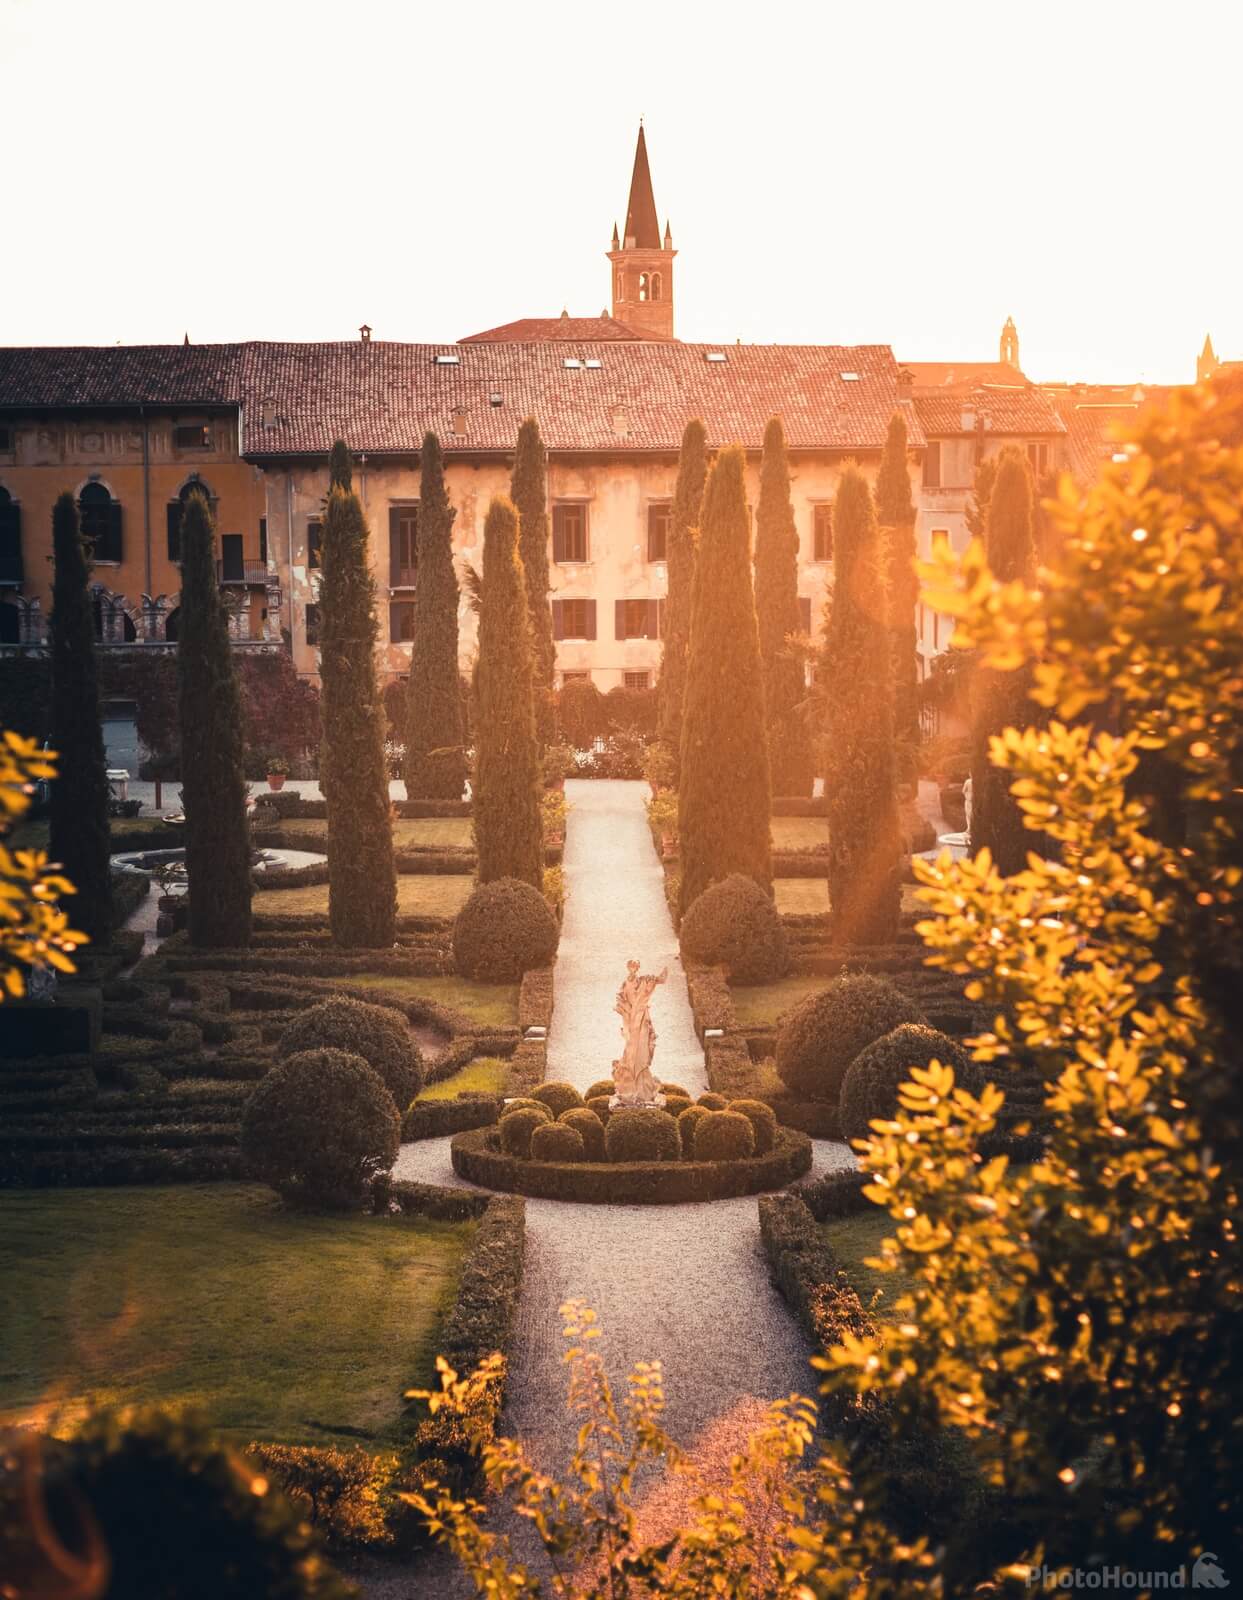 Image of Giusti Garden, Verona by Nina Lozej